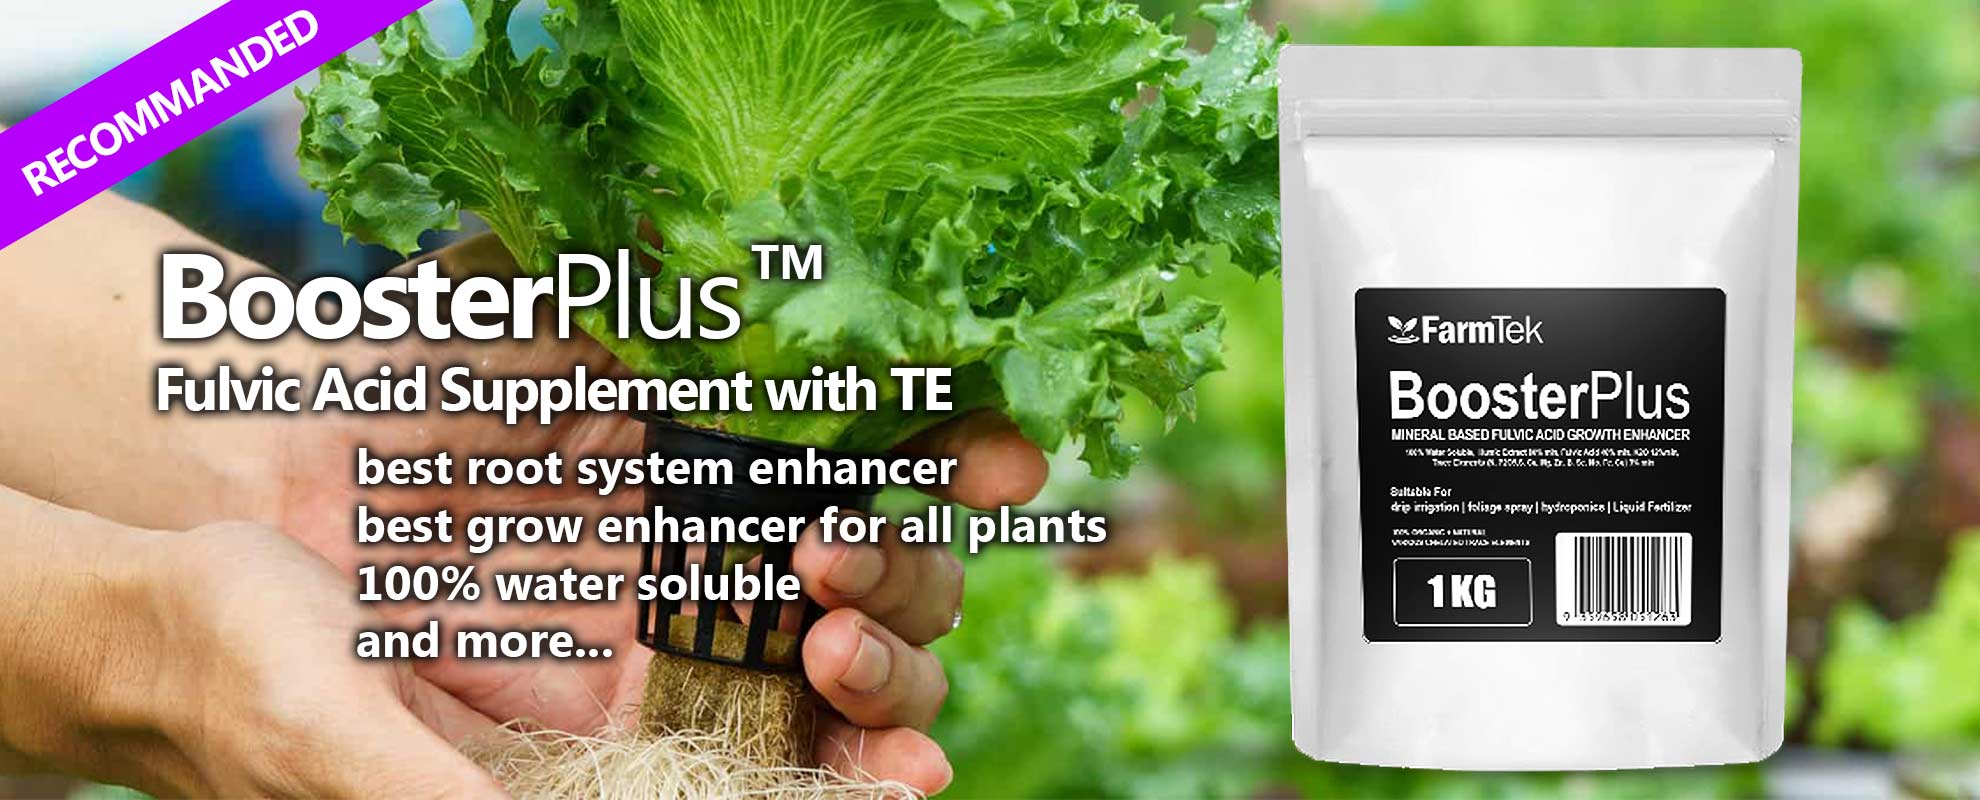 Farmtek BoosterPlus Fulvic Acid Suppliments for Plants